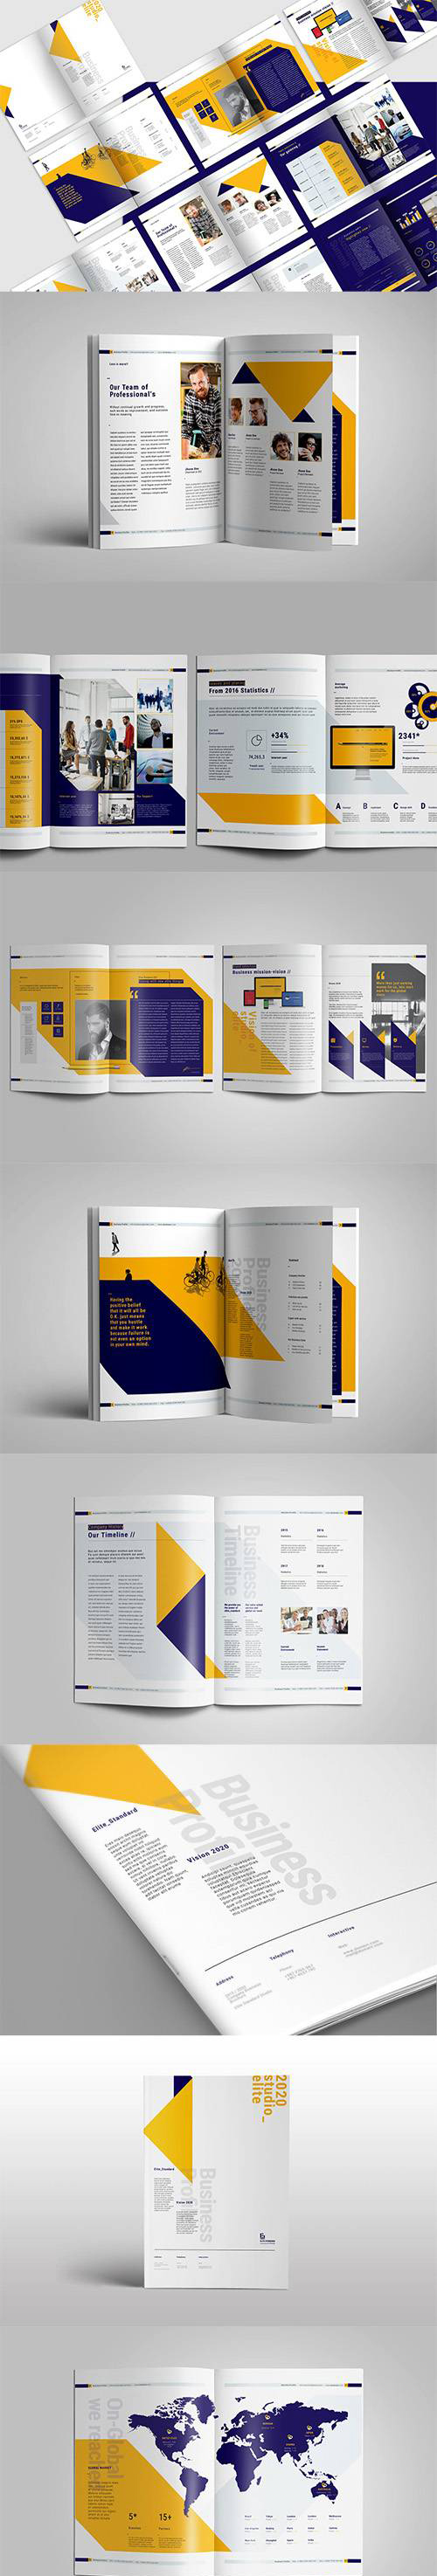 几何图形分割的企业介绍画册模板 Geometric Segmentation Of Corporate Presentation Brochure Template插图